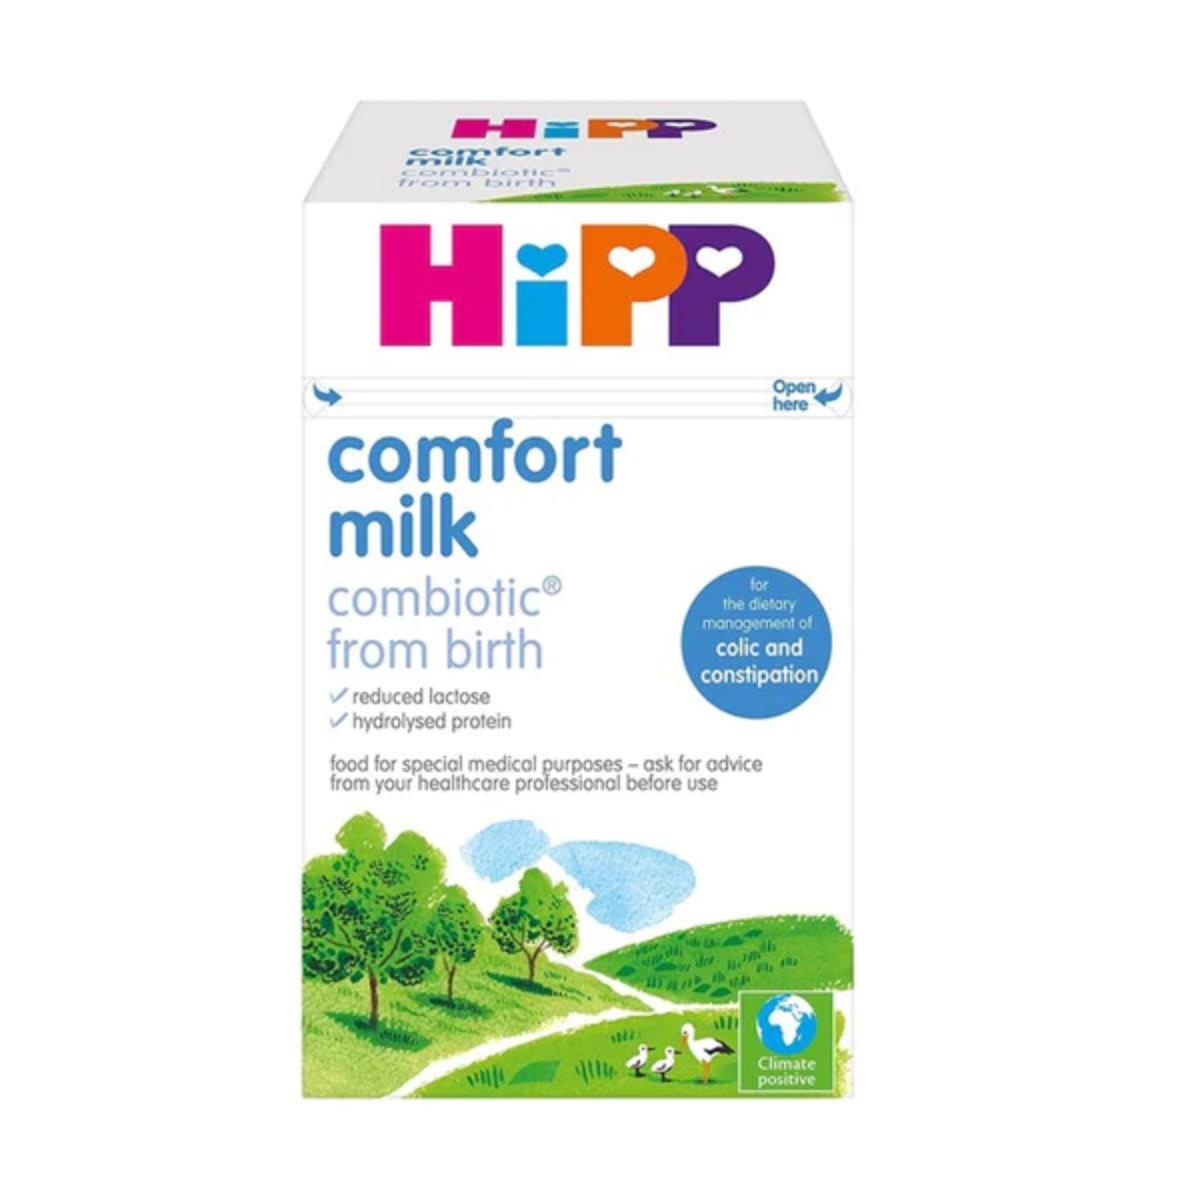 Hipp Comfort Milk Combiotic from birth - 800g